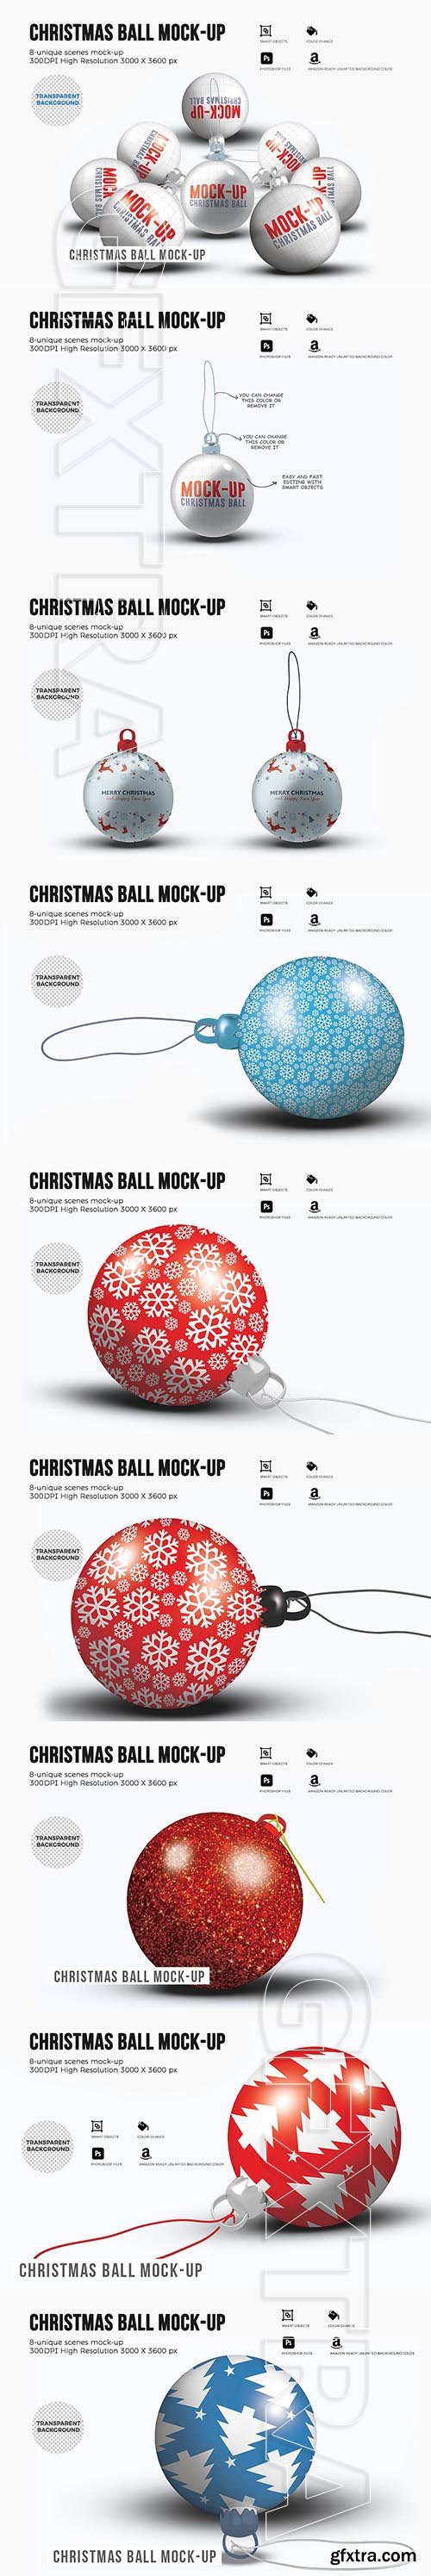 CreativeMarket - Christmas Ball Mock-up 2146971